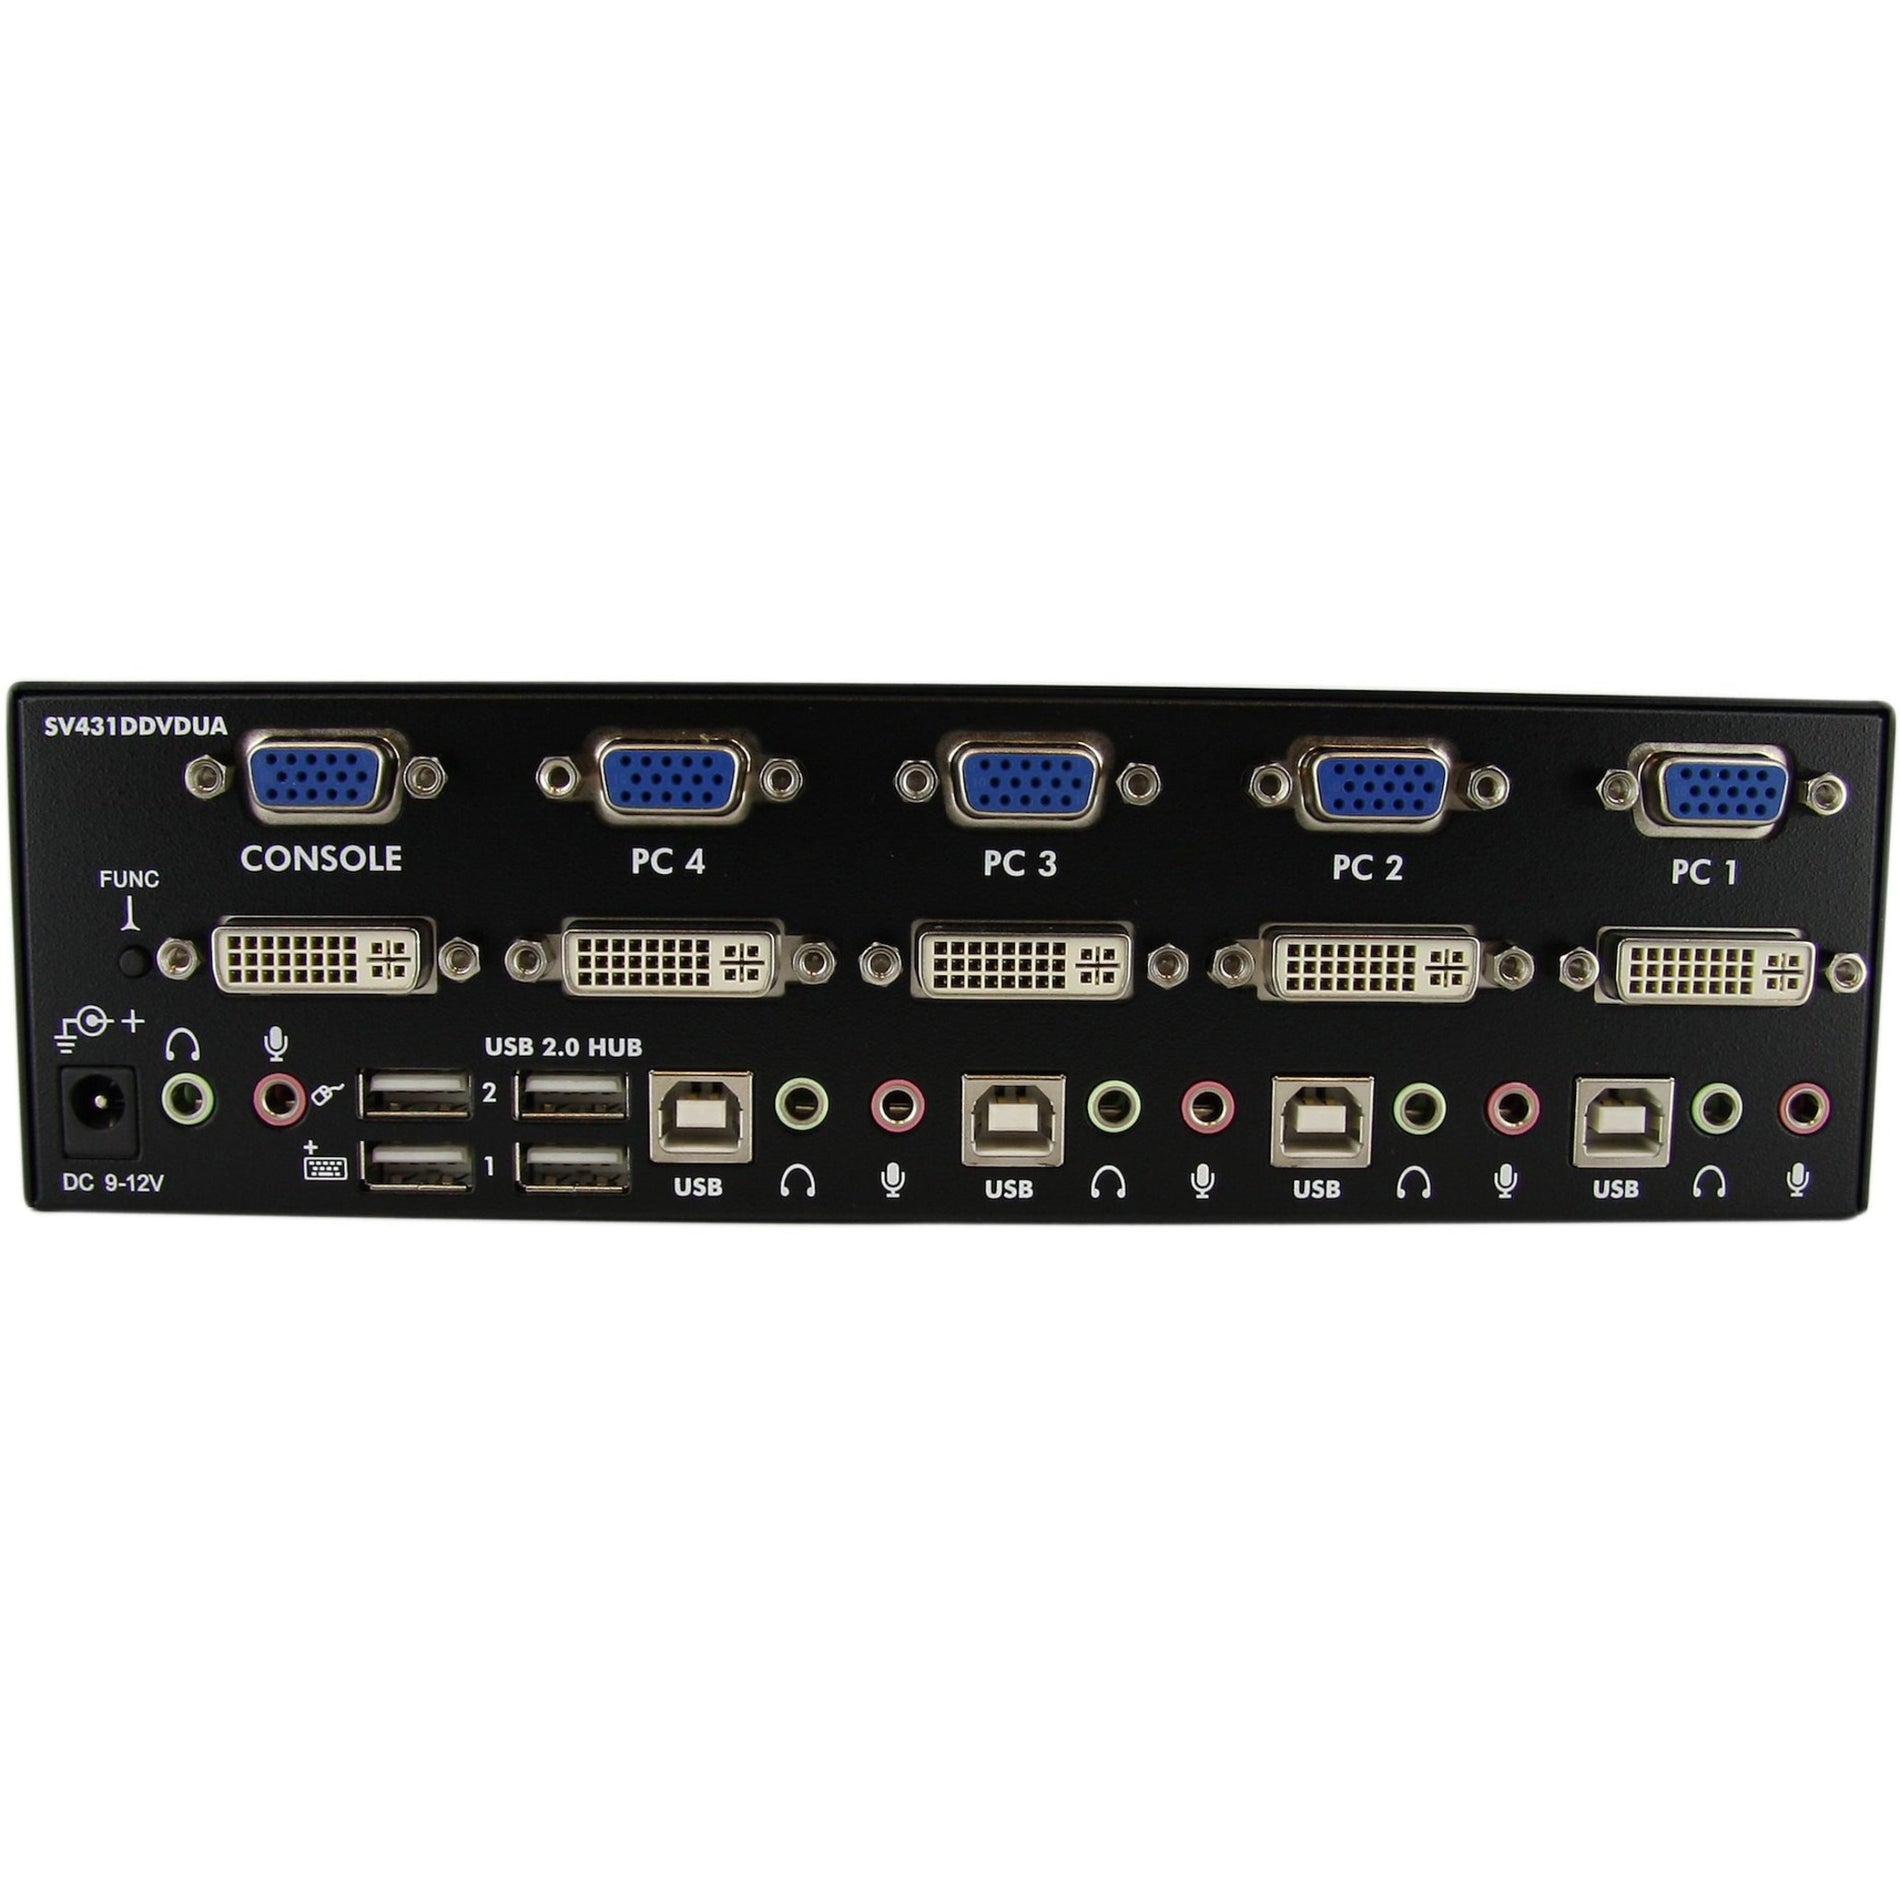 StarTech.com SV431DDVDUA 4-Port DVI and VGA USB KVM Switch with Audio and USB 2.0 Hub Dual Monitor Support